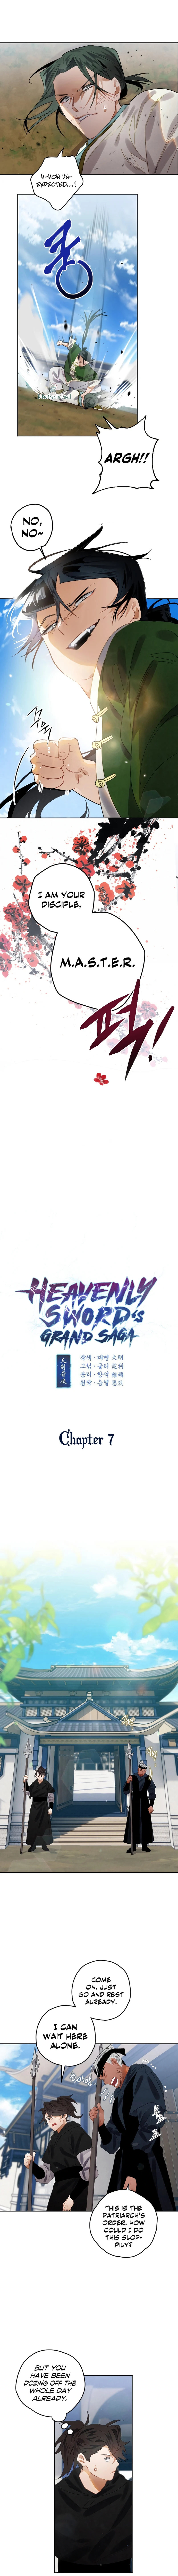 Heavenly Sword’s Grand Saga - Chapter 7 Page 1